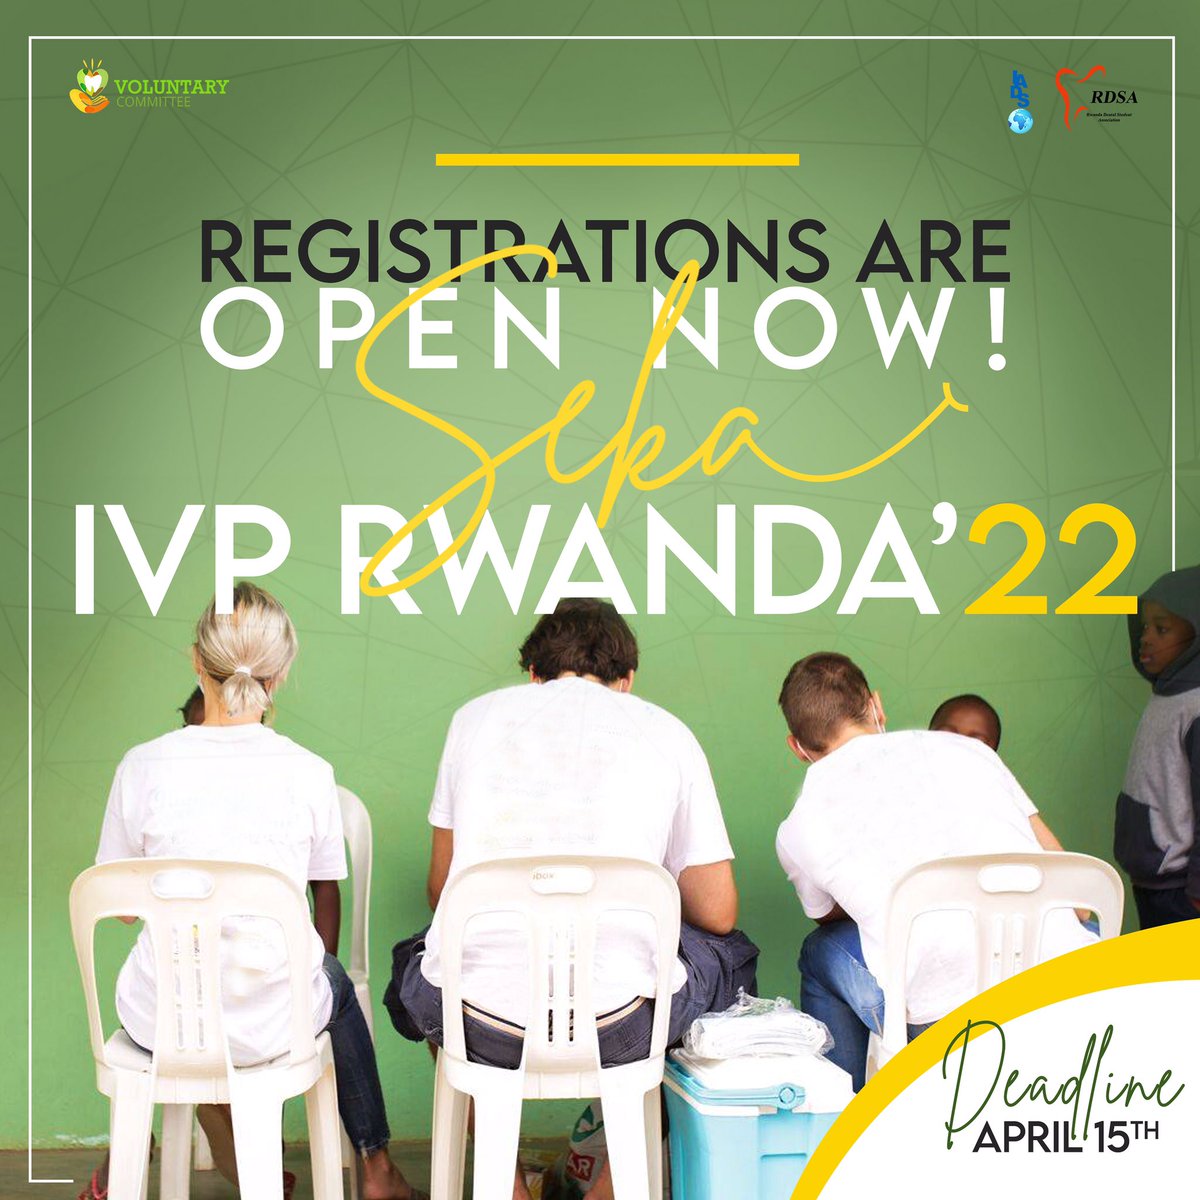 Registrations for IVP Rwanda Seka is open now!

Fill the application form and grab your seat before it’s taken! 

docs.google.com/forms/d/1iLSbf…

#volunteer #voluntarywork #rwanda #IVPRwanda22